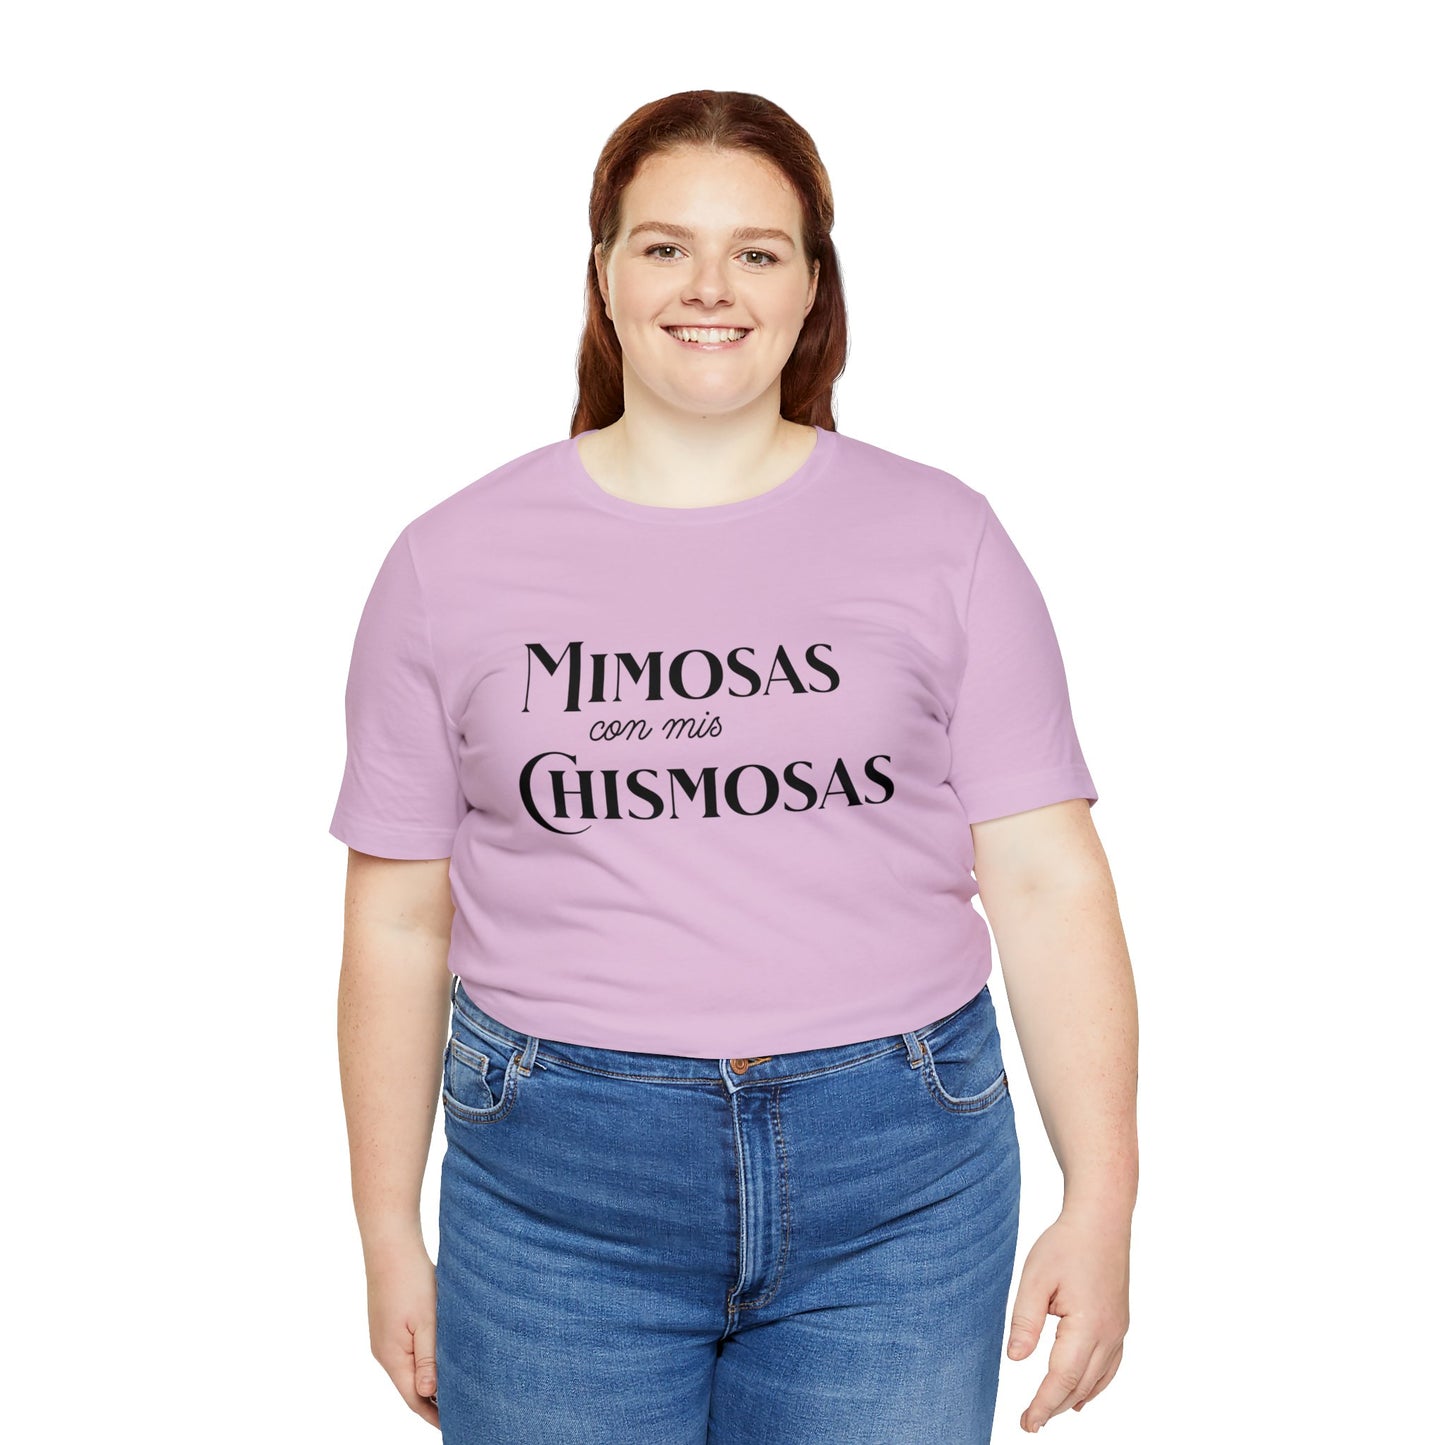 Mimosas con mis chismosas - Jersey Short Sleeve T-Shirt